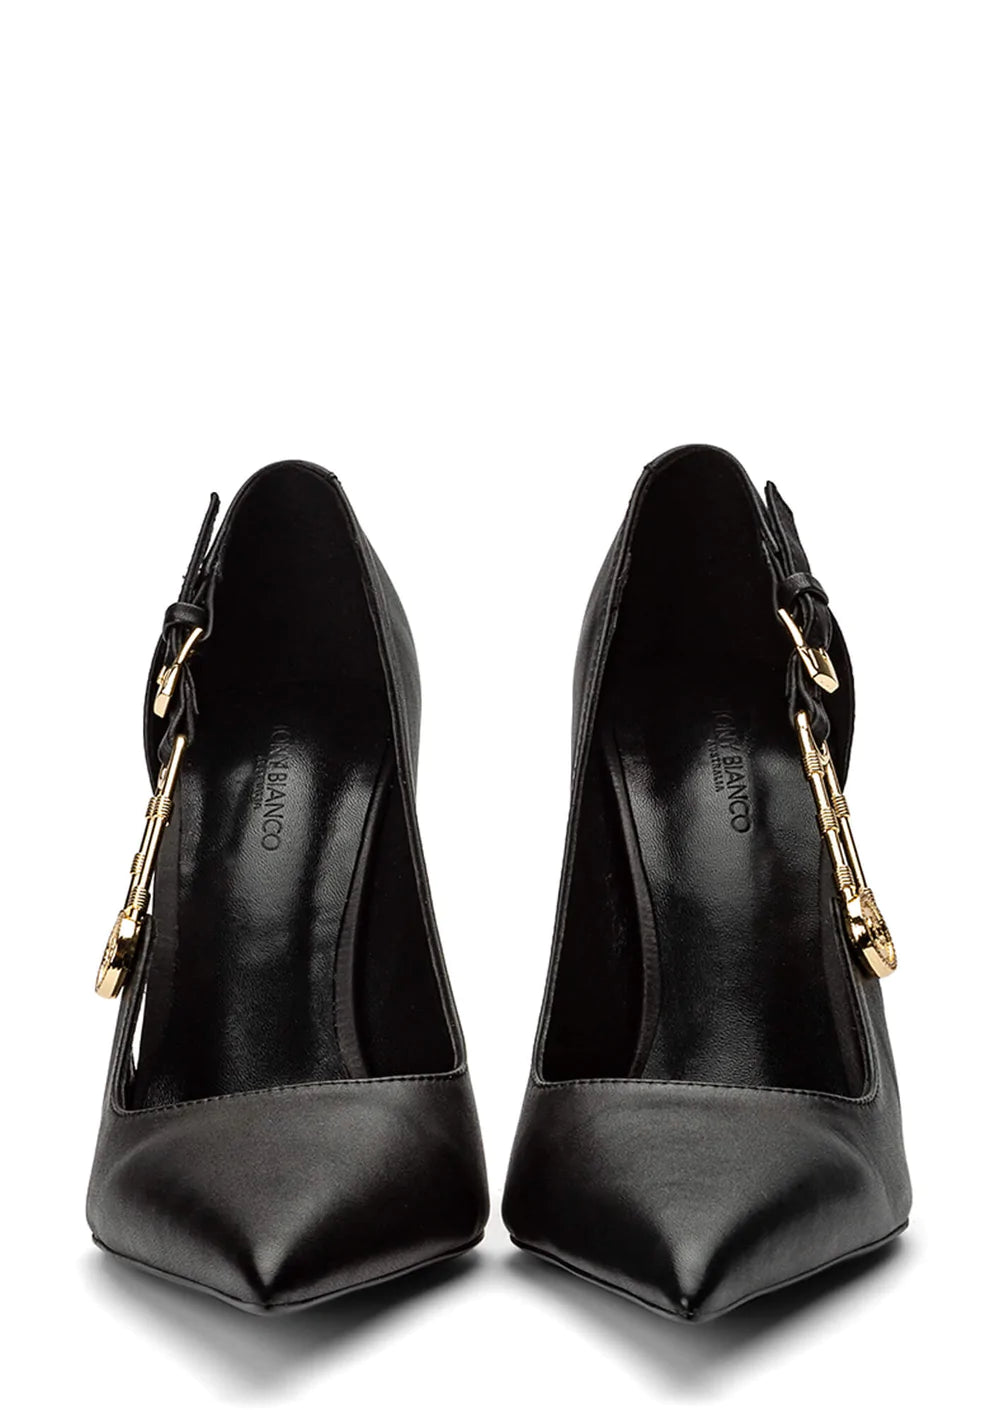 GLOW PUMP - TONY BIANCO - 10, 5, 6, 6.5, 7, 7.5, 8, 8.5, 9, BLACK, skin, womens footwear - Stomp Shoes Darwin